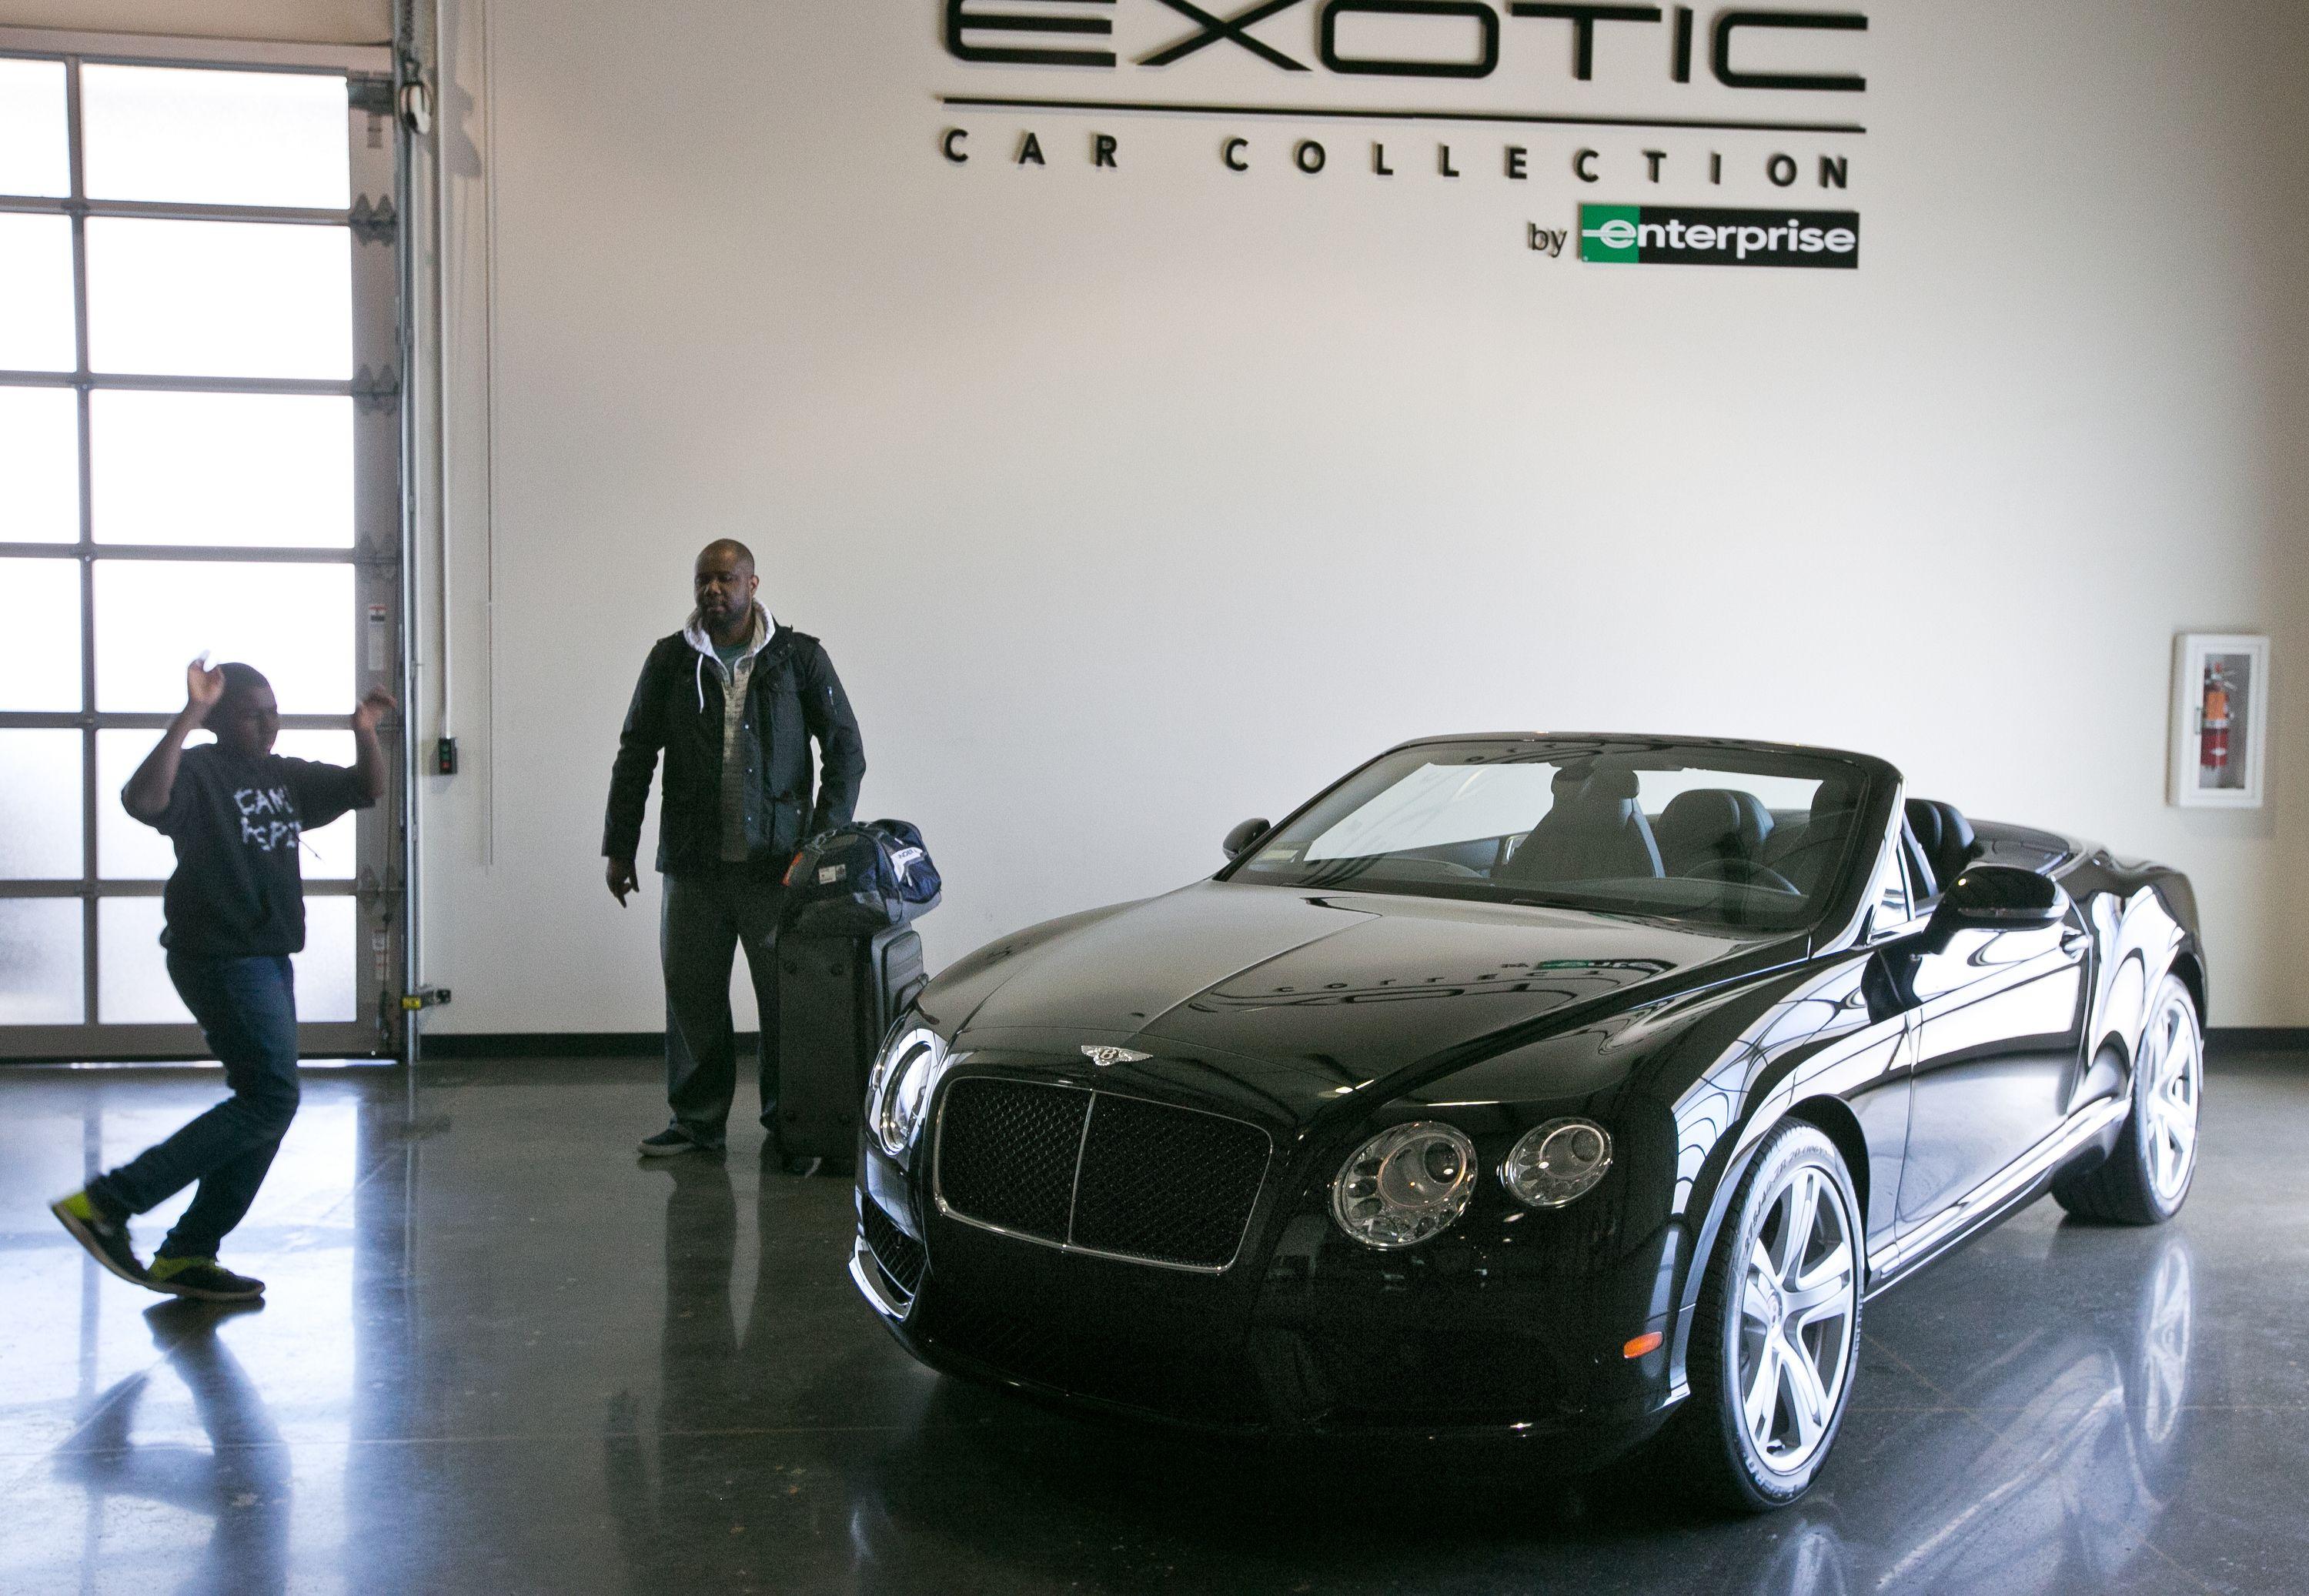 Enterpriseexotic Cars Logo - Las Vegas, NV - Car Rental Companies Ramp Up Exotic Offerings